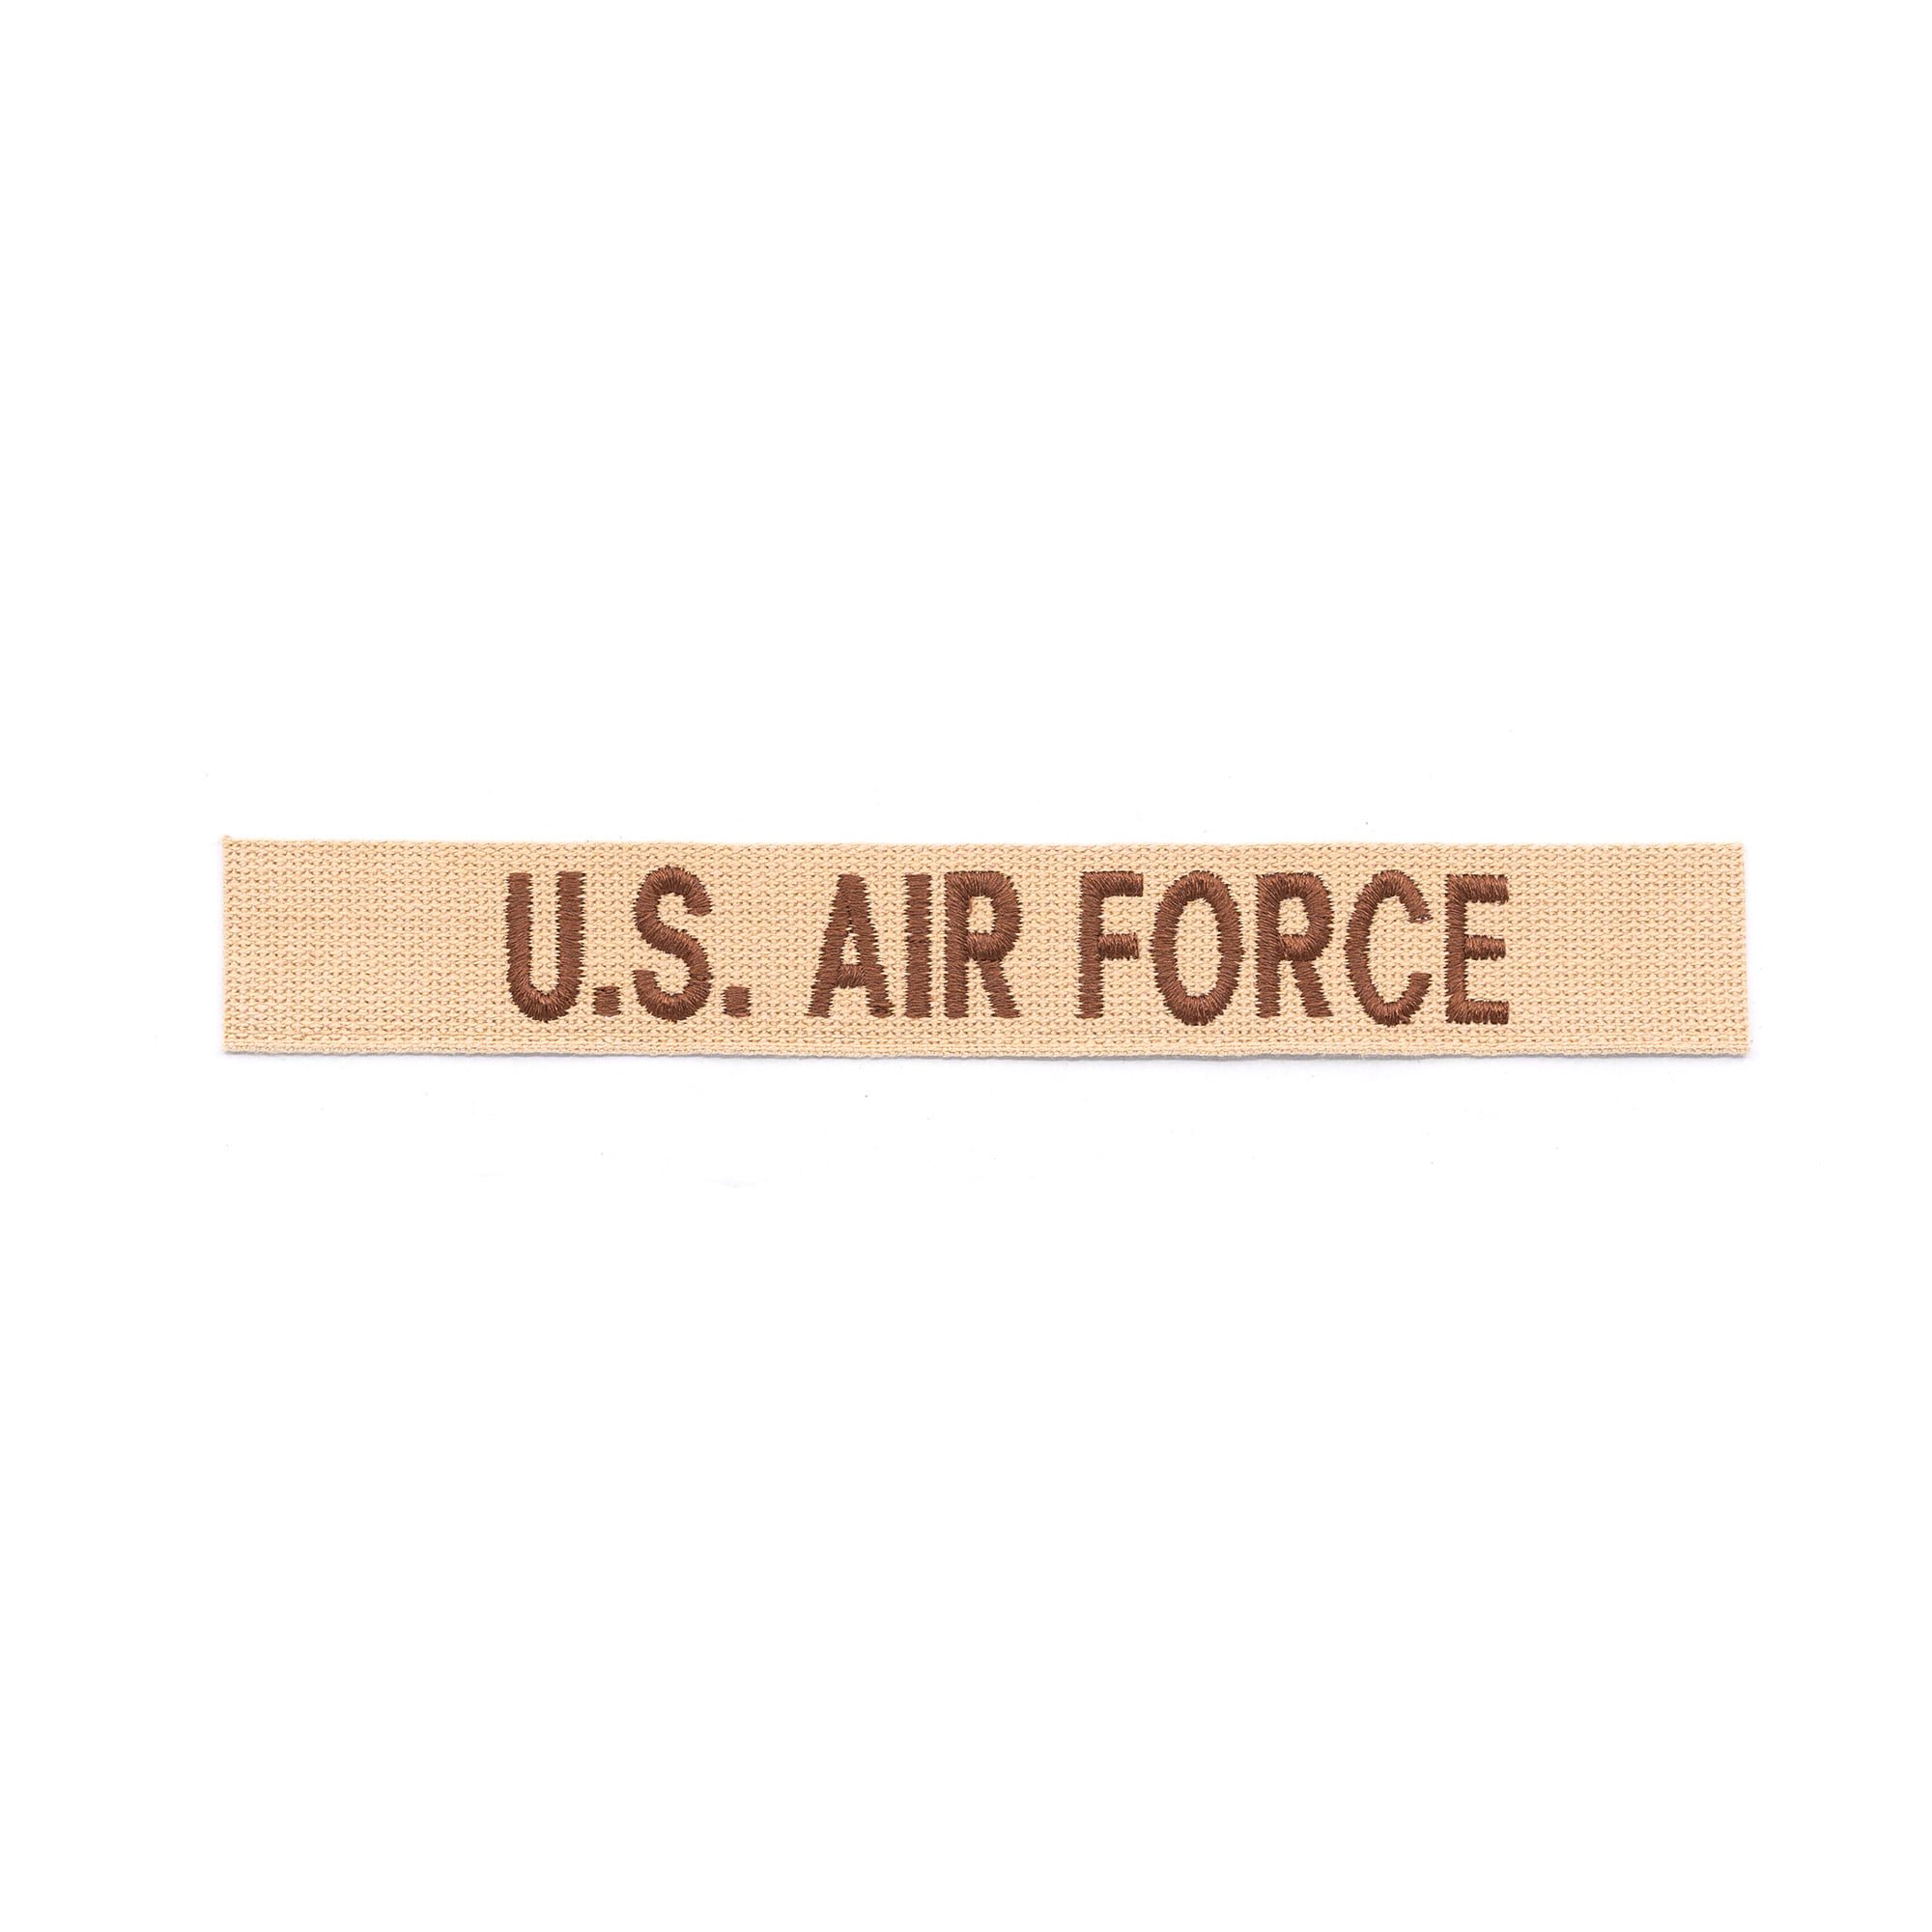 Nášivka "U.S. AIRFORCE" DESERT